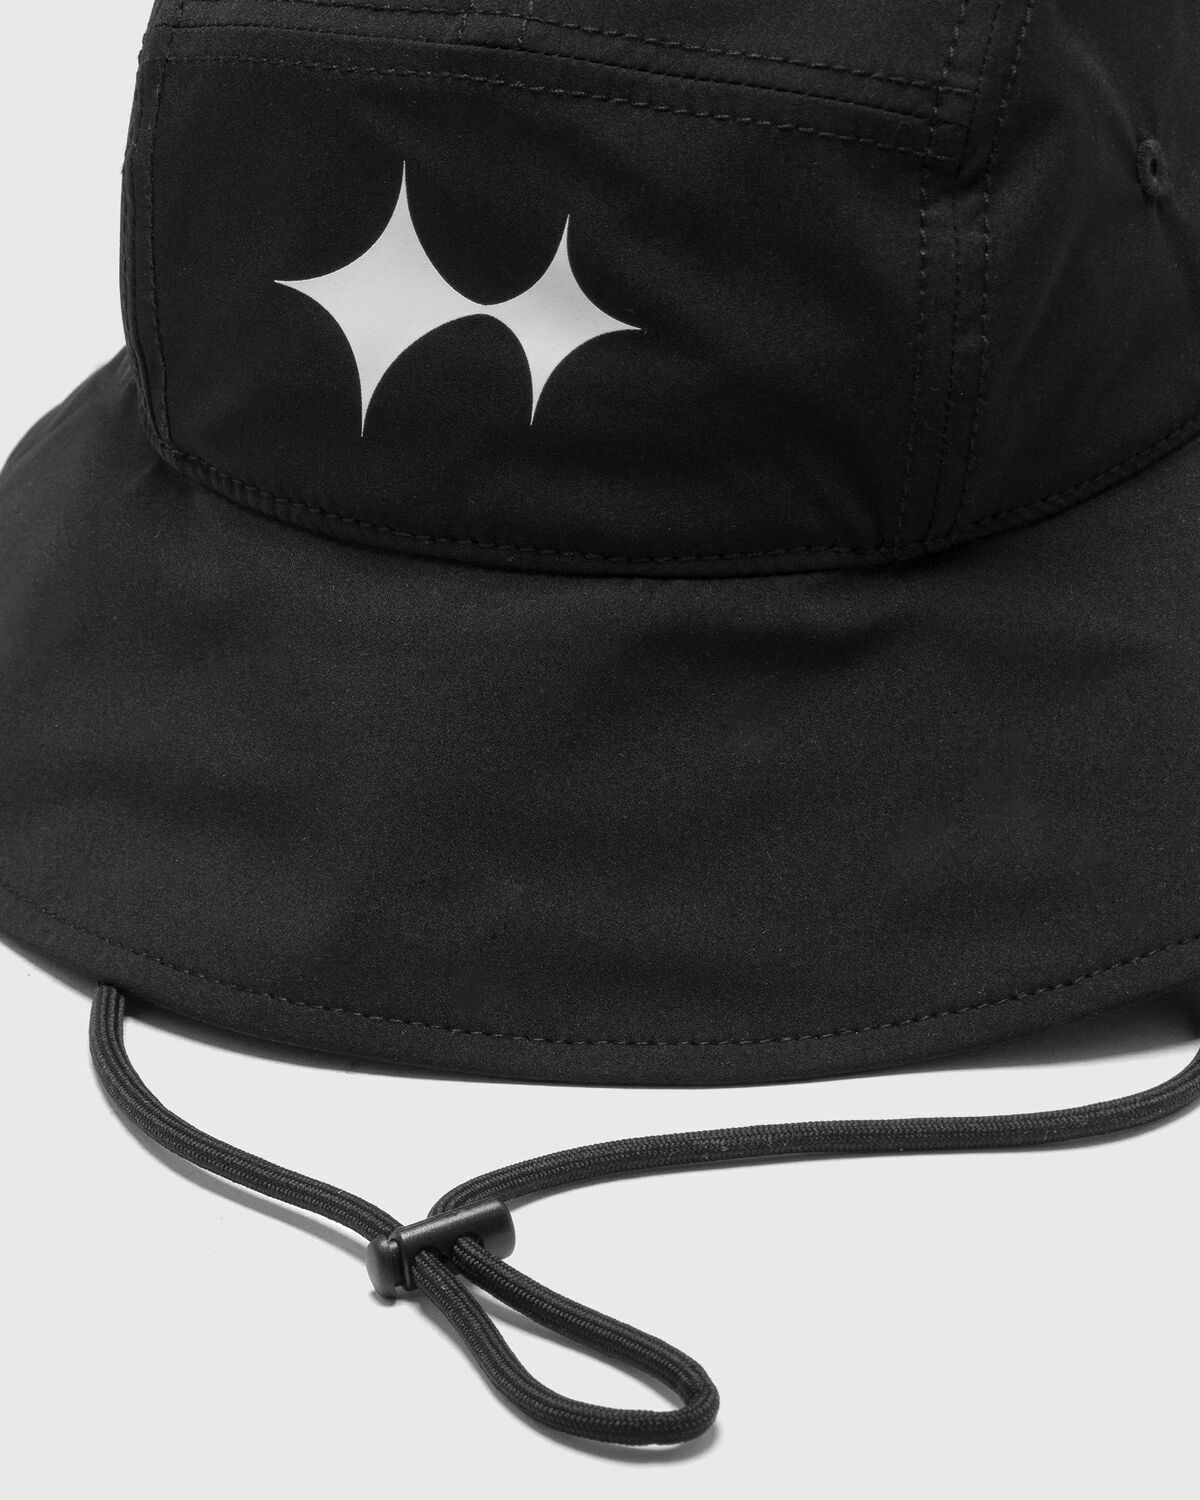 Bstn Brand Shell Hat Black - Mens - Hats